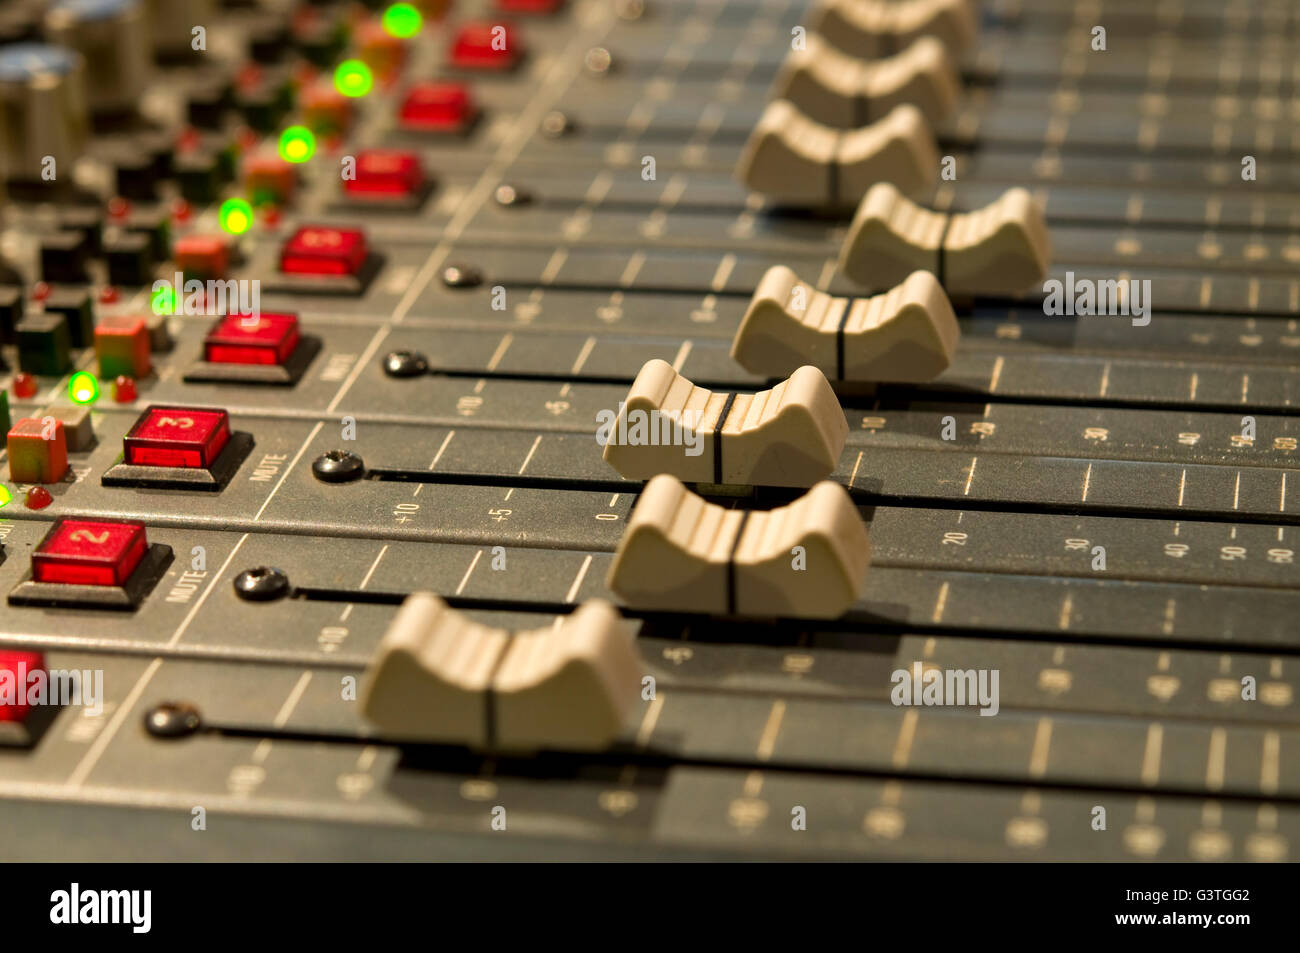 Recording device in Recording Studio Stock Photo